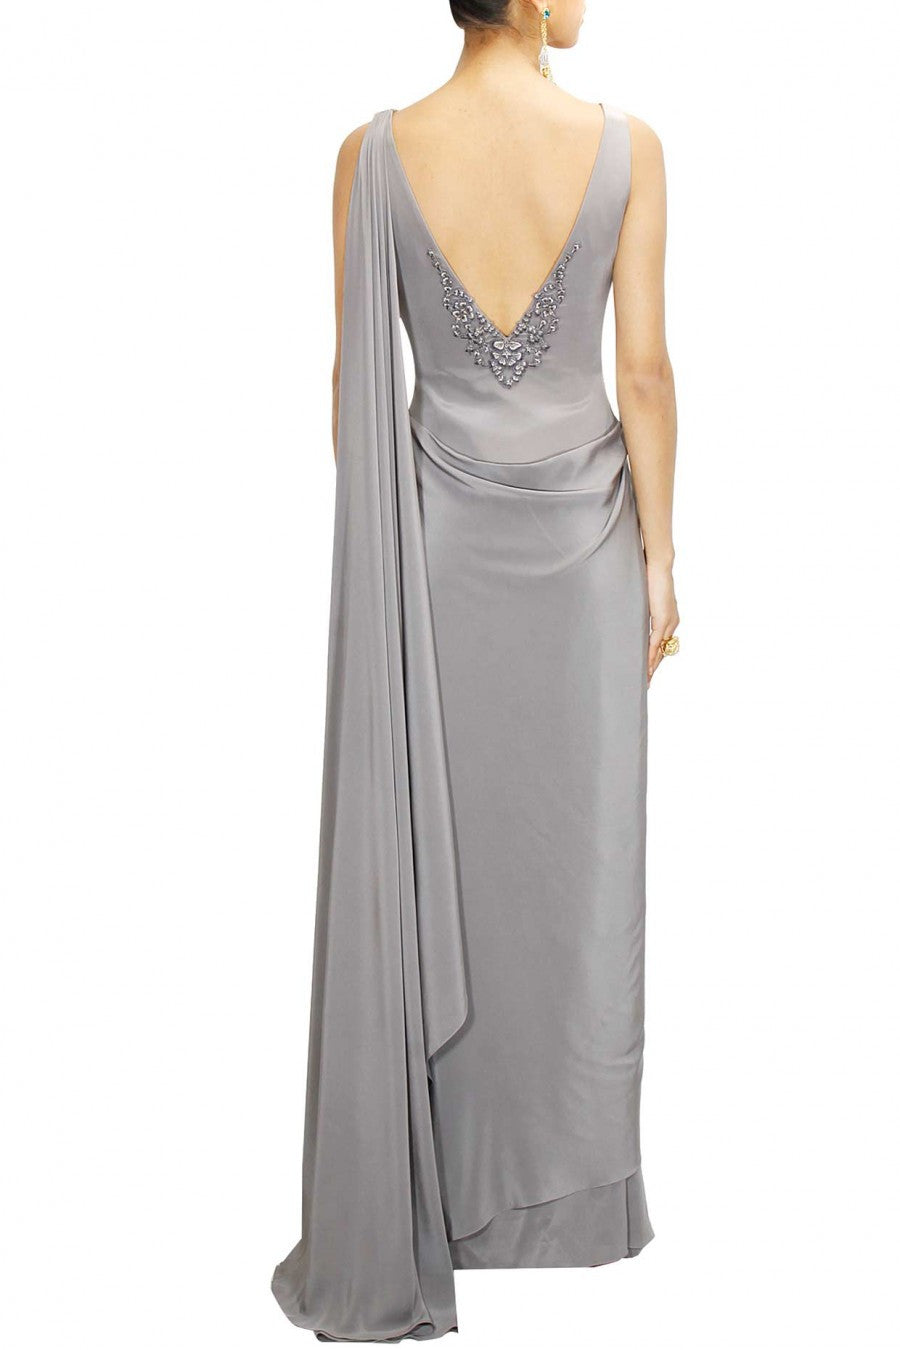 Grey Colour Saree Gown